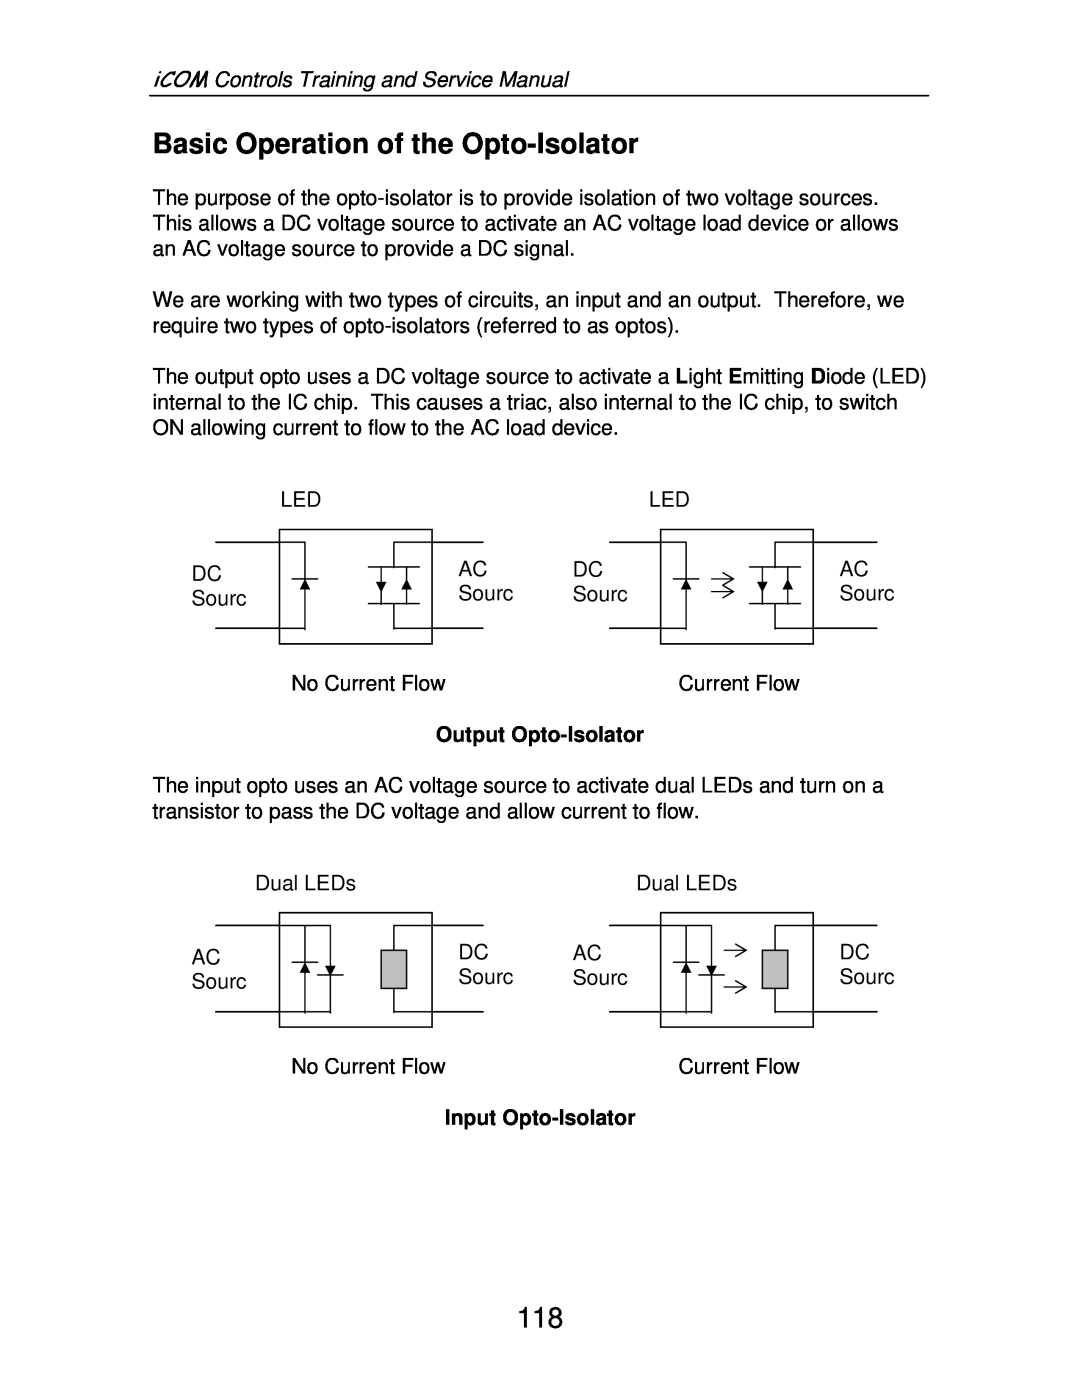 Liebert TM-10098 service manual Basic Operation of the Opto-Isolator, Output Opto-Isolator, Input Opto-Isolator 